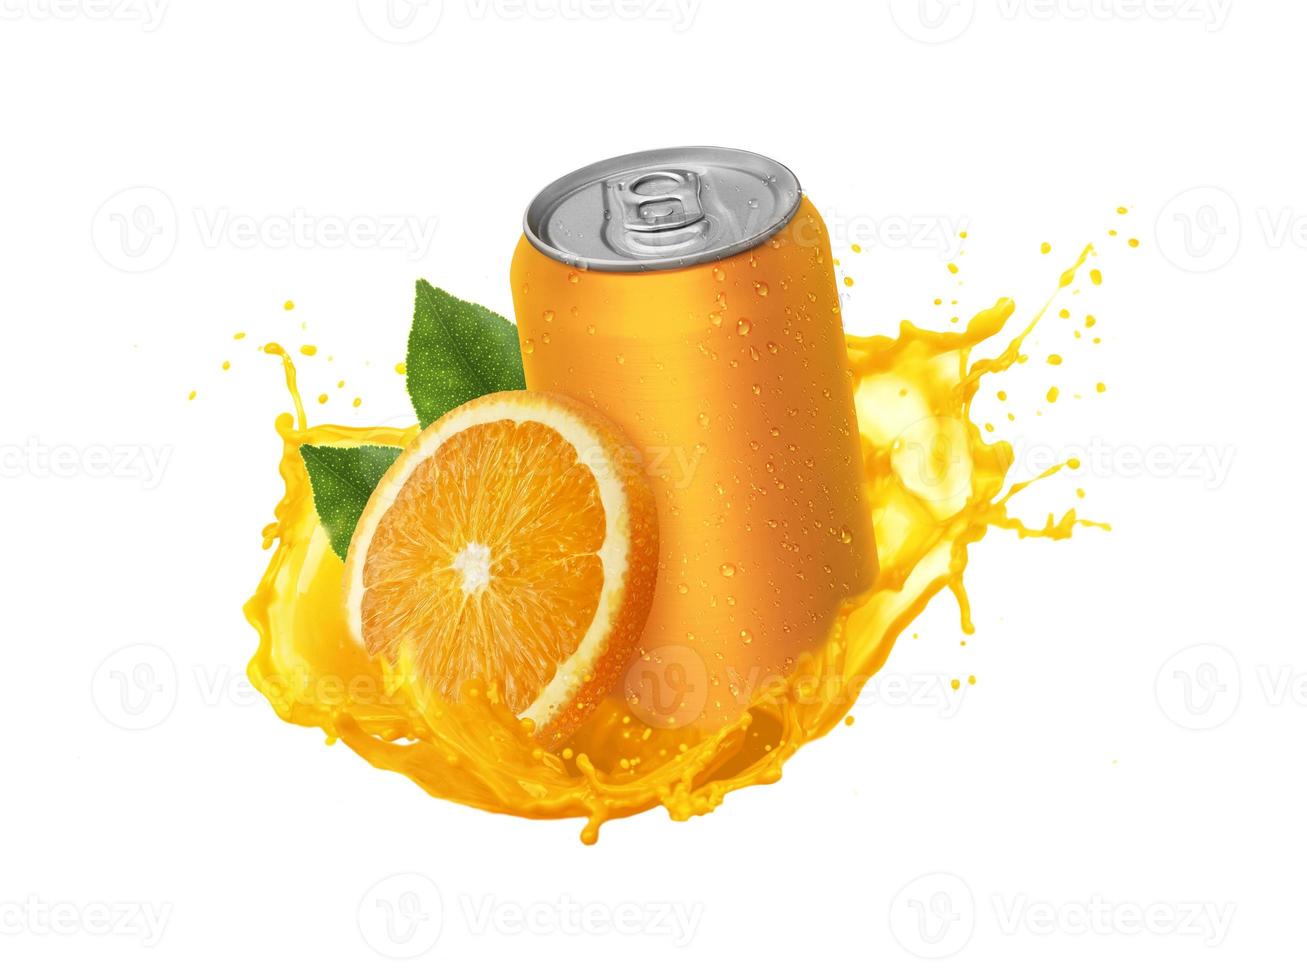 lata de refresco de naranja de aluminio con frutas, sobre fondo blanco, retoque fotográfico de jugo de naranja foto